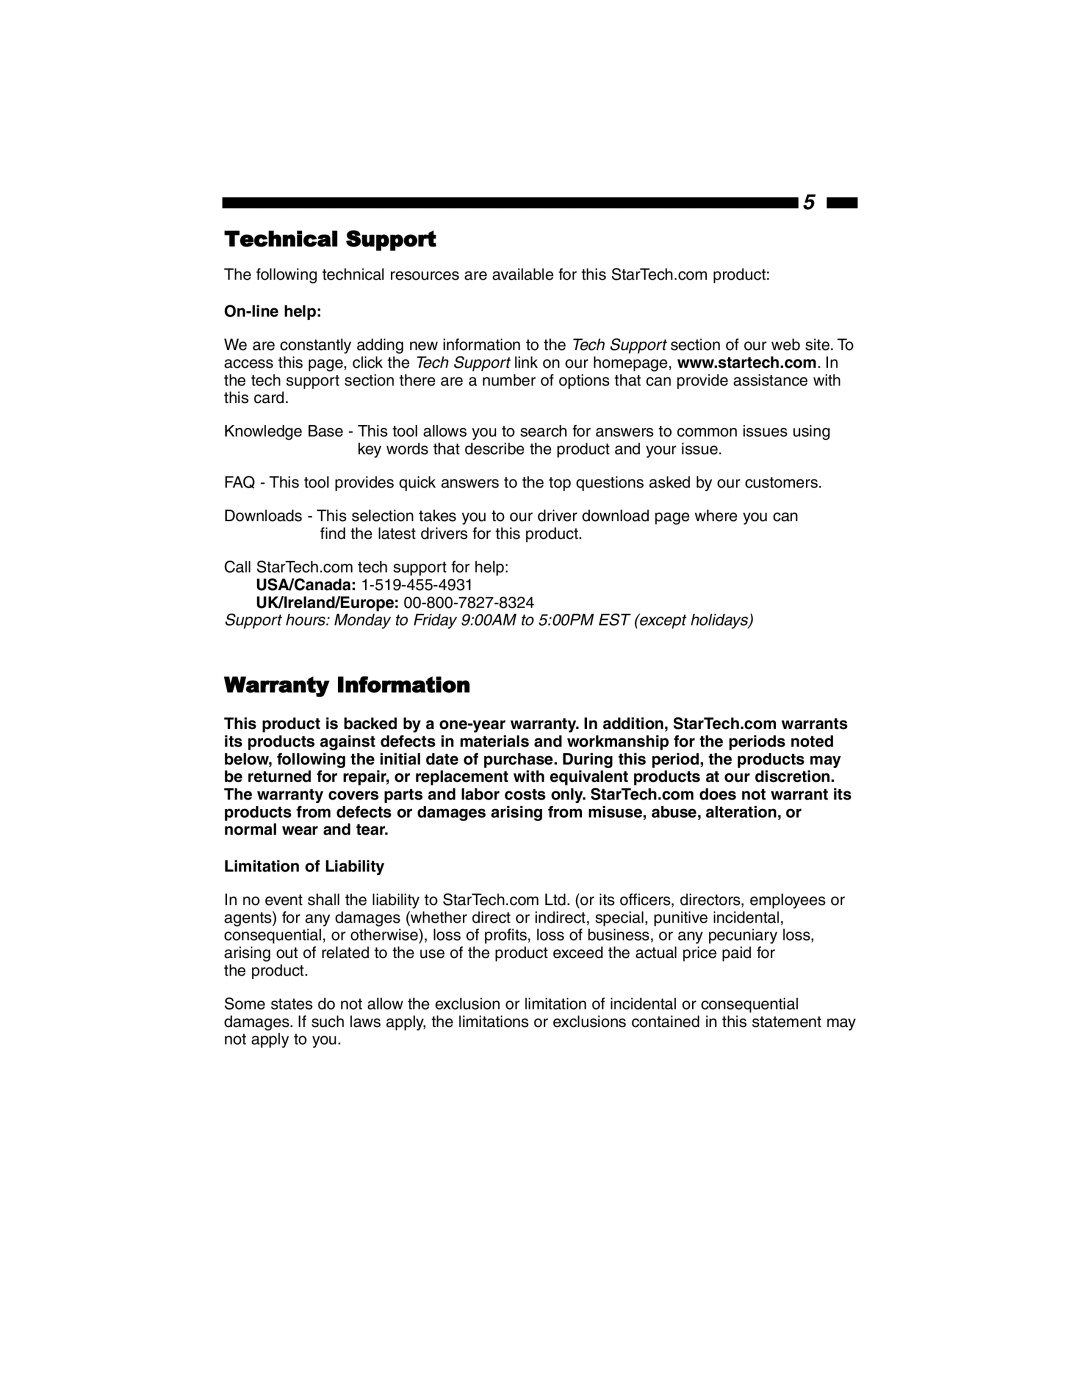 StarTech.com ST4200MINI manual Technical Support, Warranty Information 